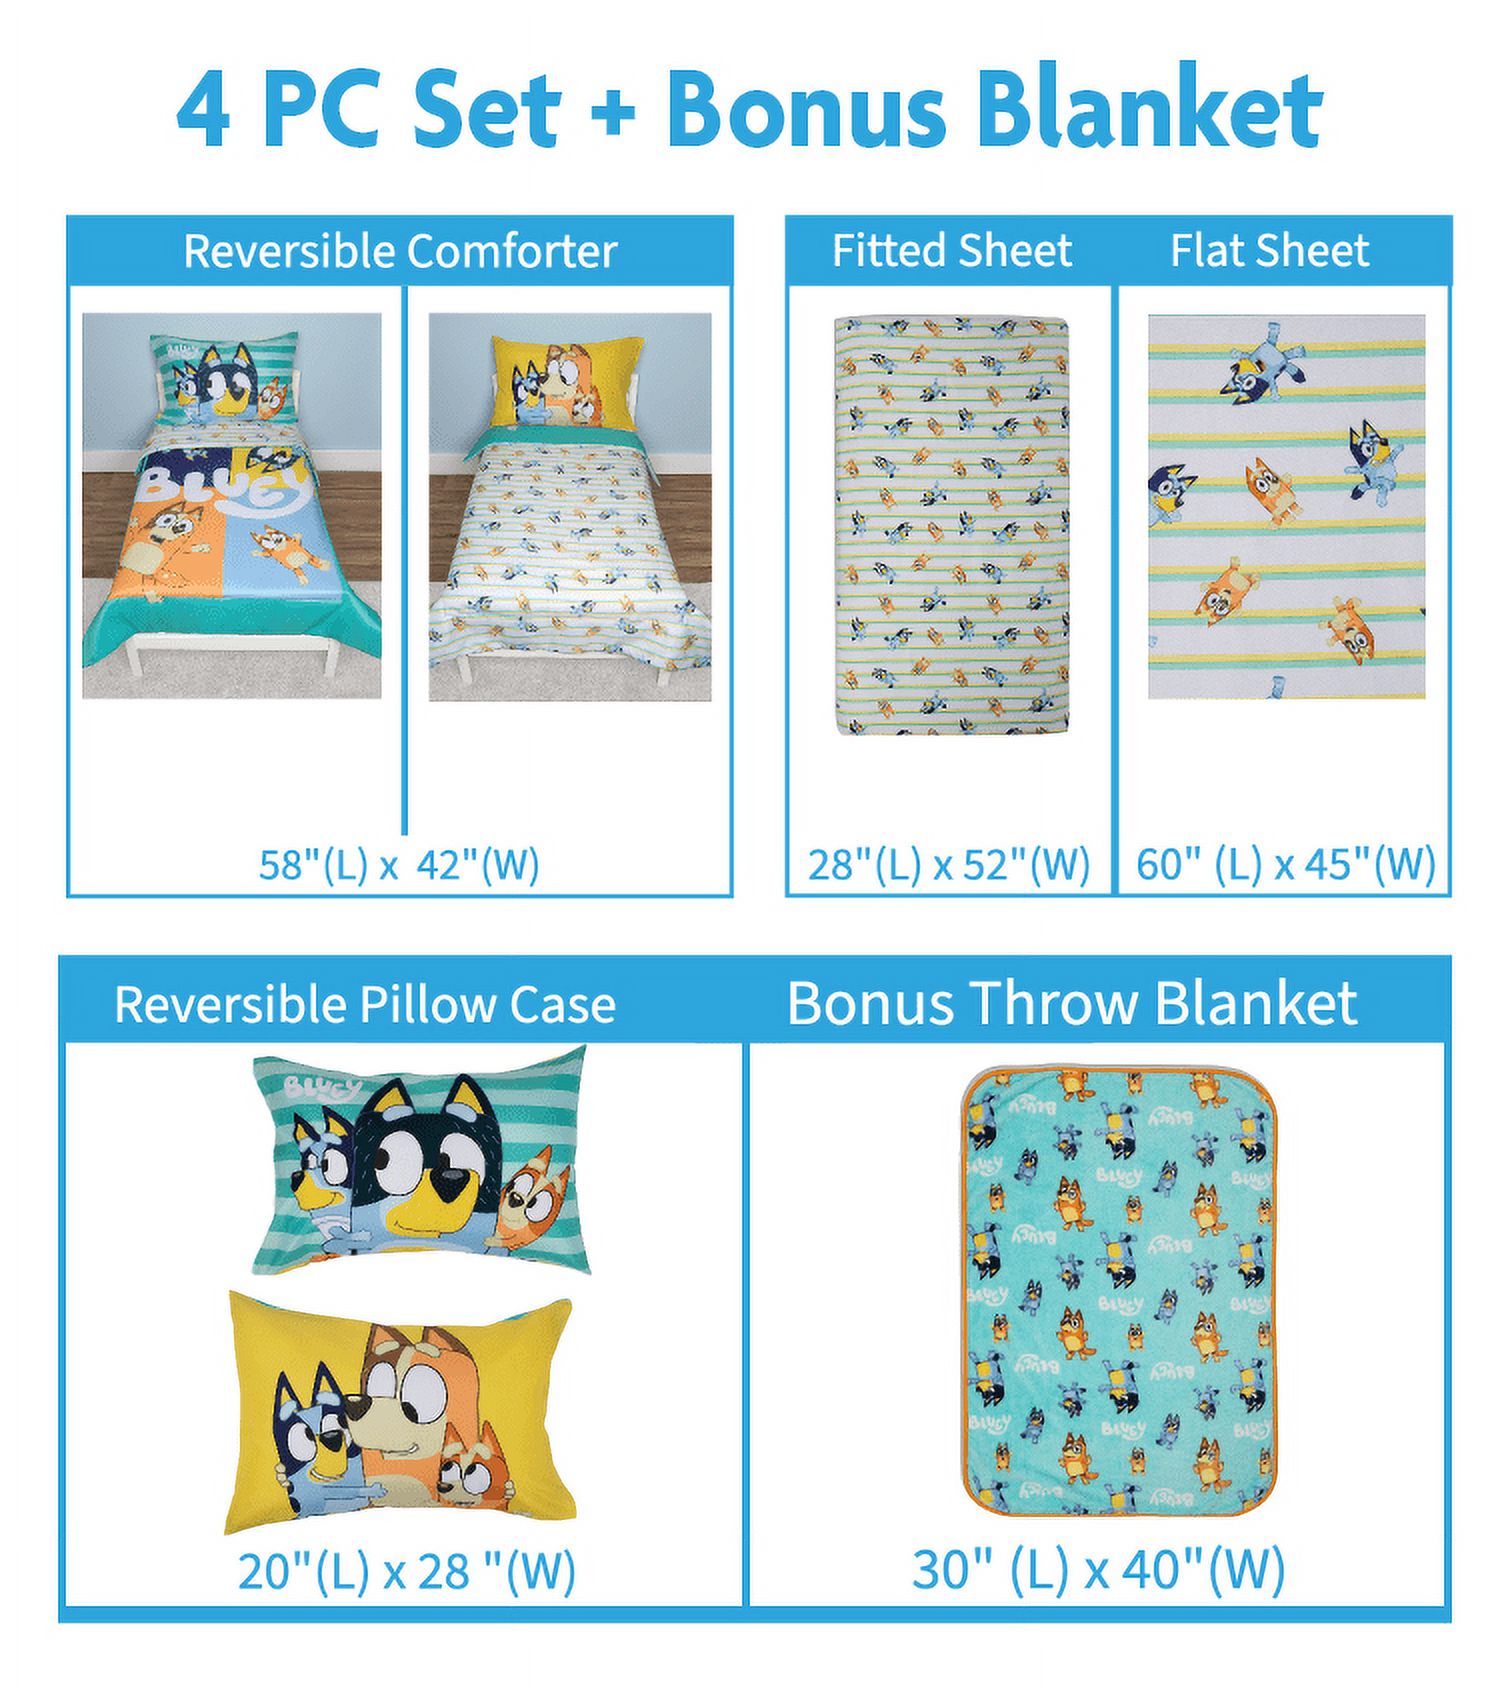 Bluey Toddler 5pc Bedding Set with Blanket - Blue - image 2 of 9